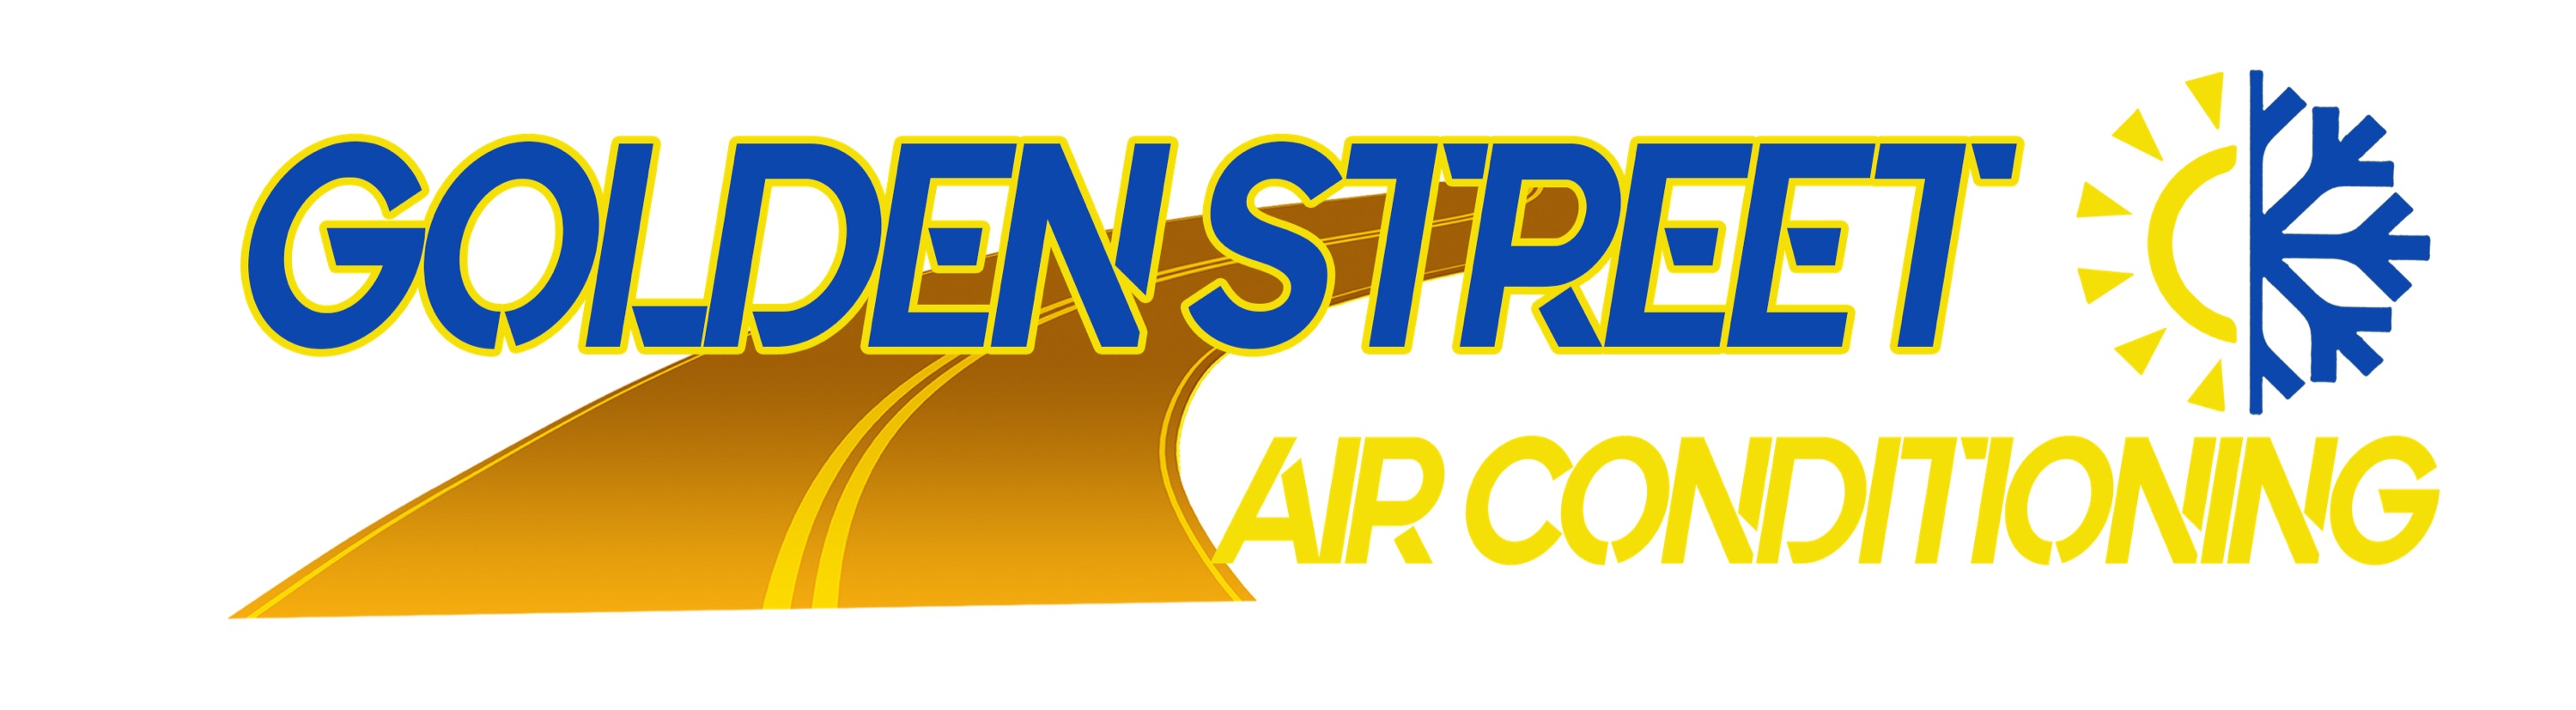 Golden Street Air Conditioning LLC Logo